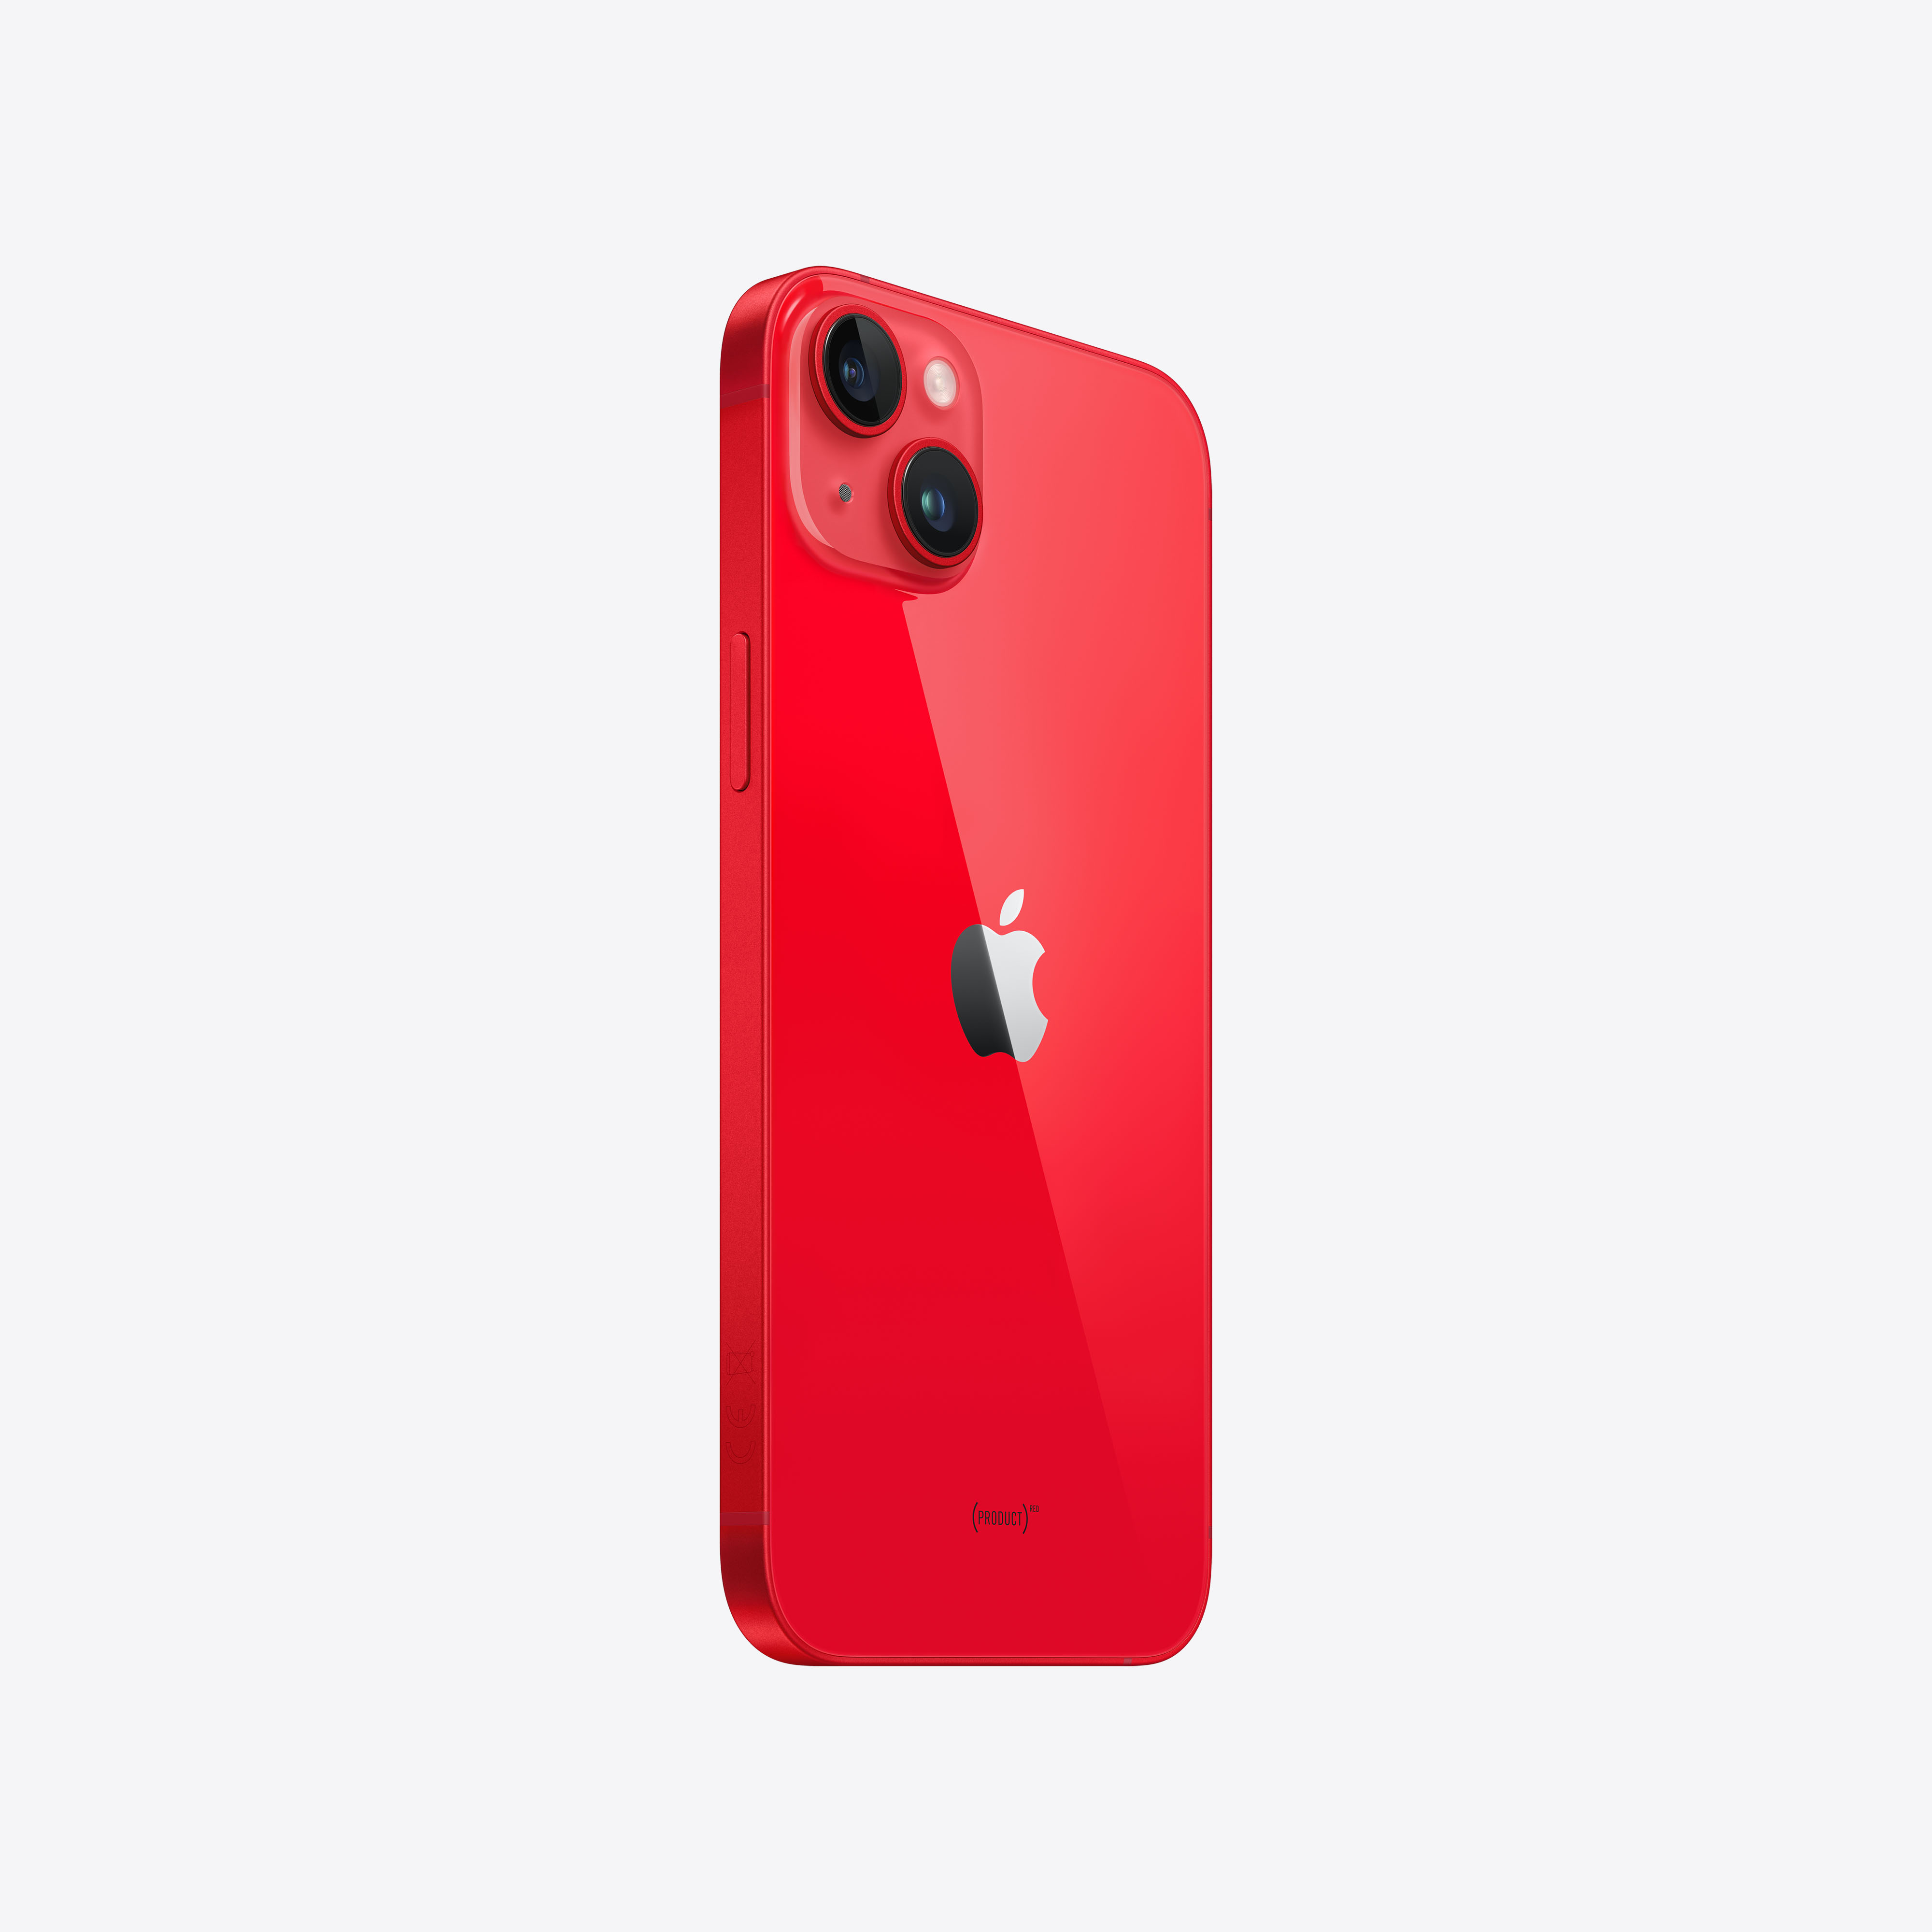 APPLE iPhone 14 Plus (Product) Dual GB SIM Red 128